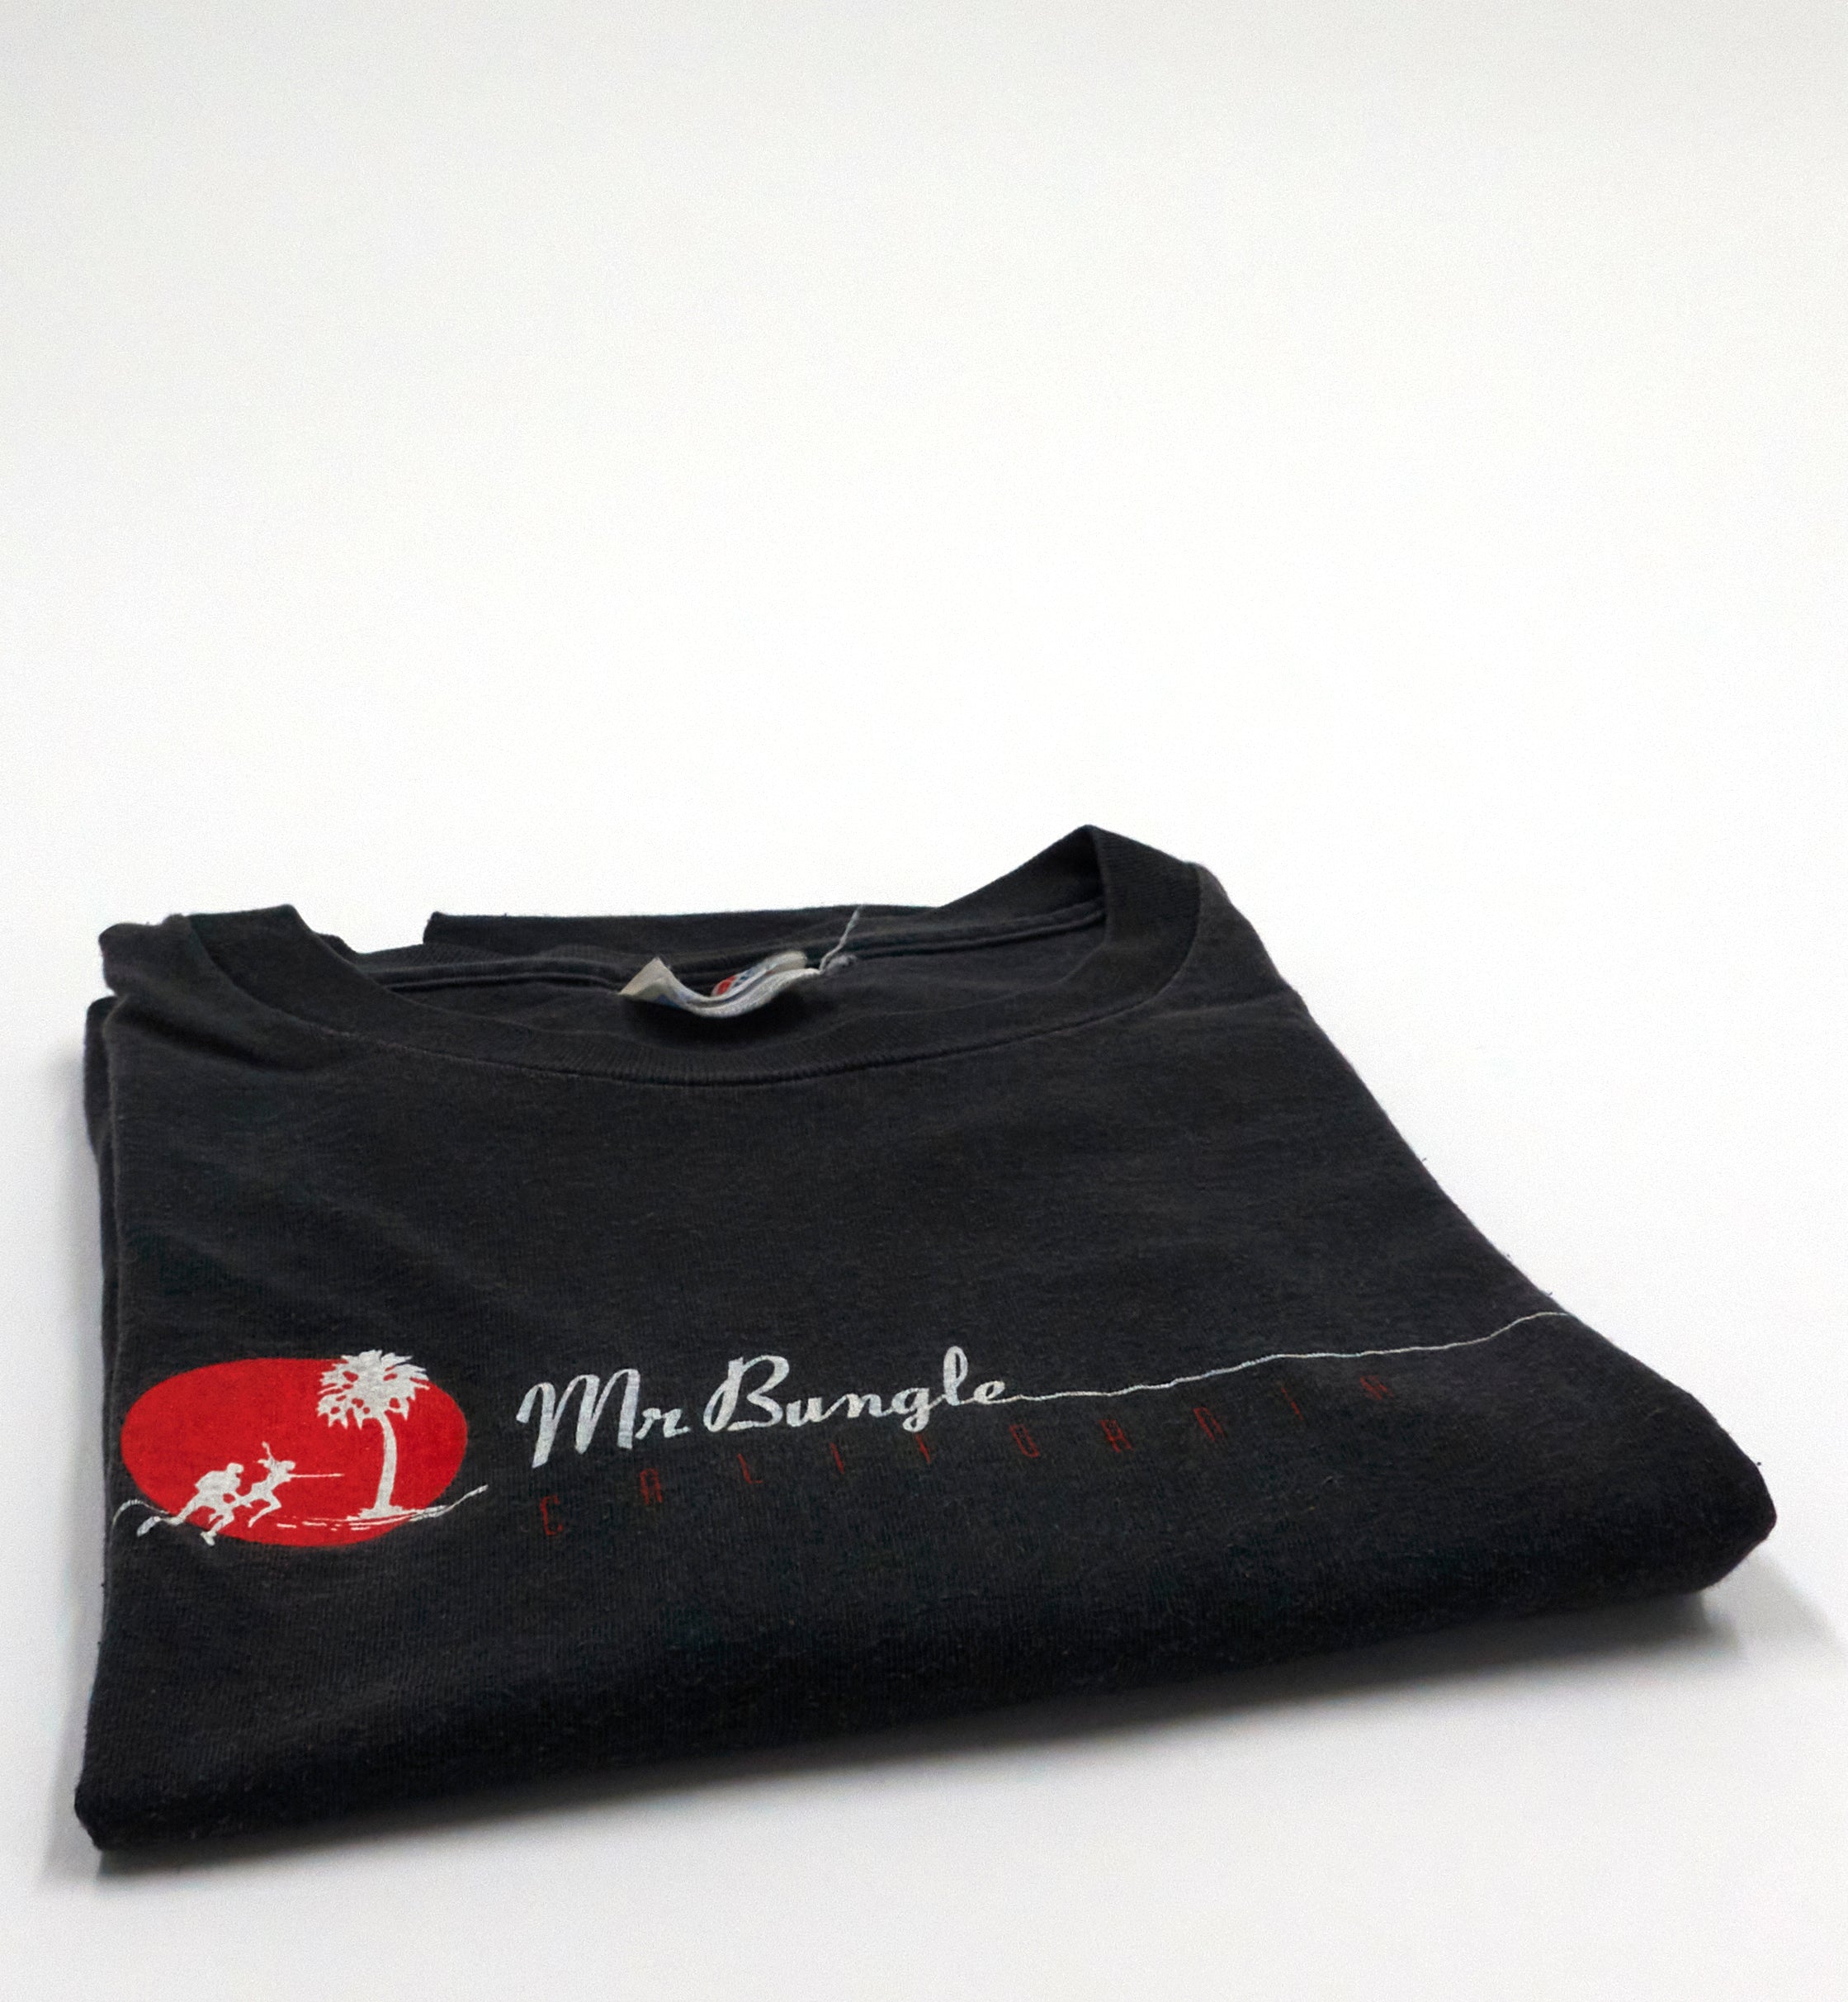 Mr. Bungle - California 1999 Tour Issue Shirt Size XL